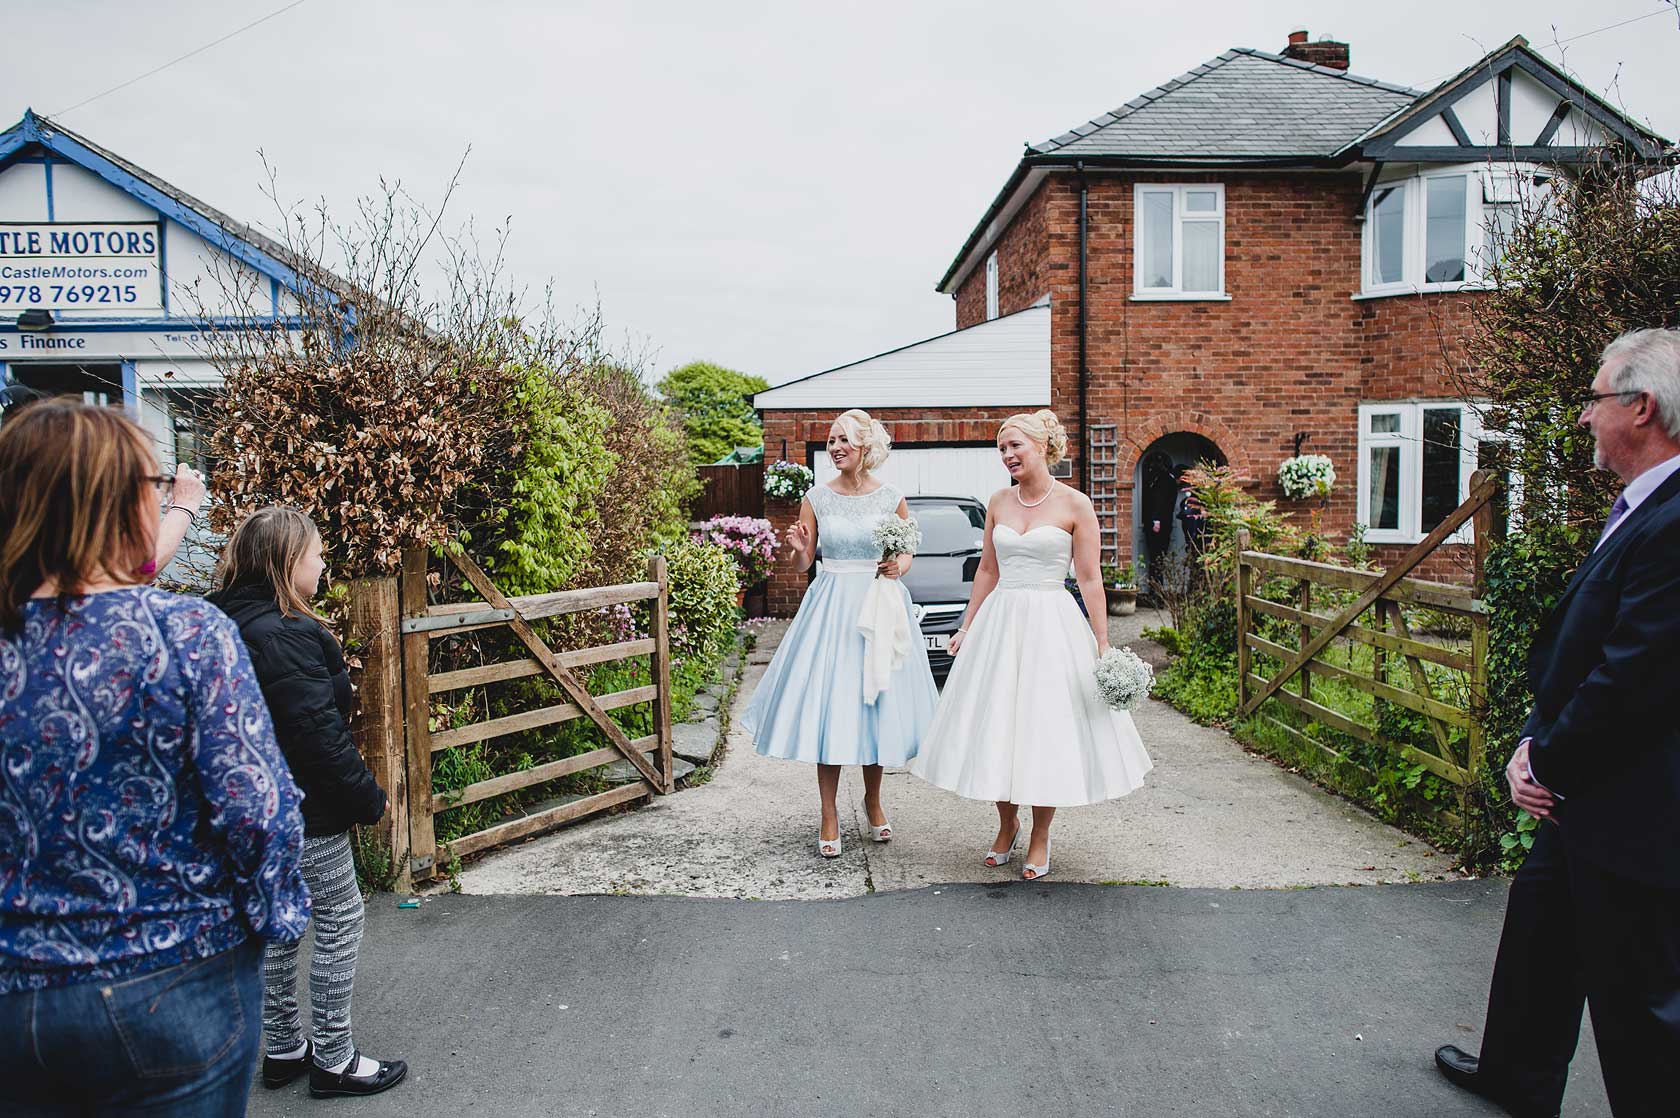 Reportage Wedding Photography at Eccleston Village Hall